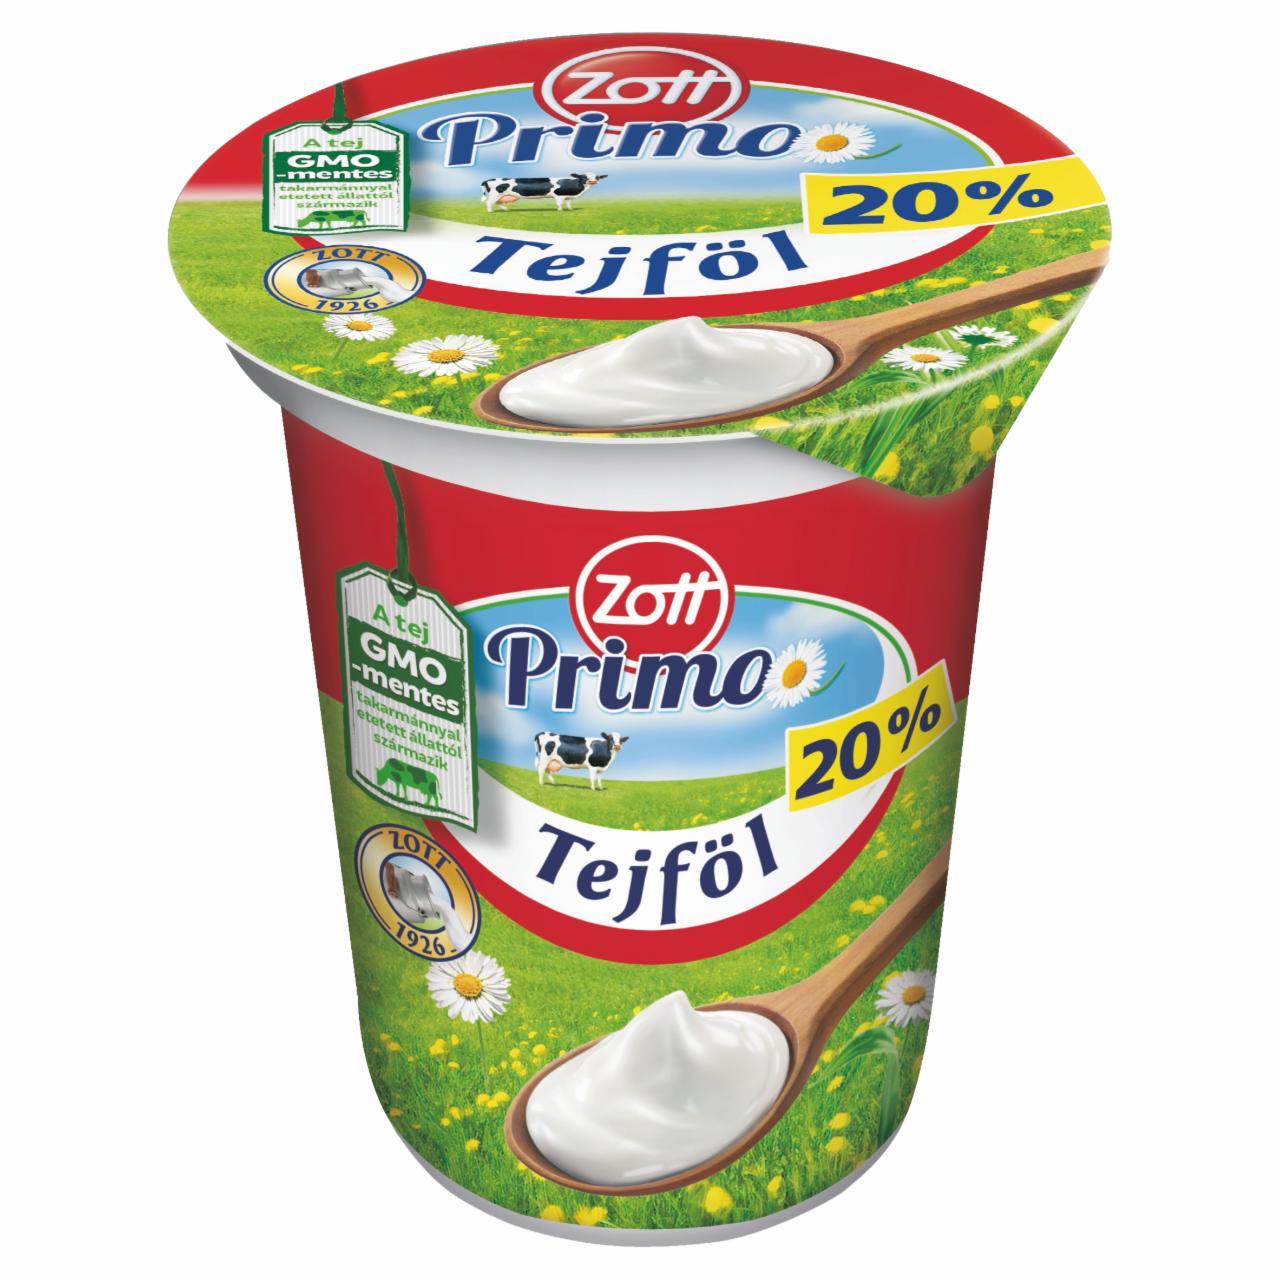 Képek - Zott Primo tejföl 20% 330 g